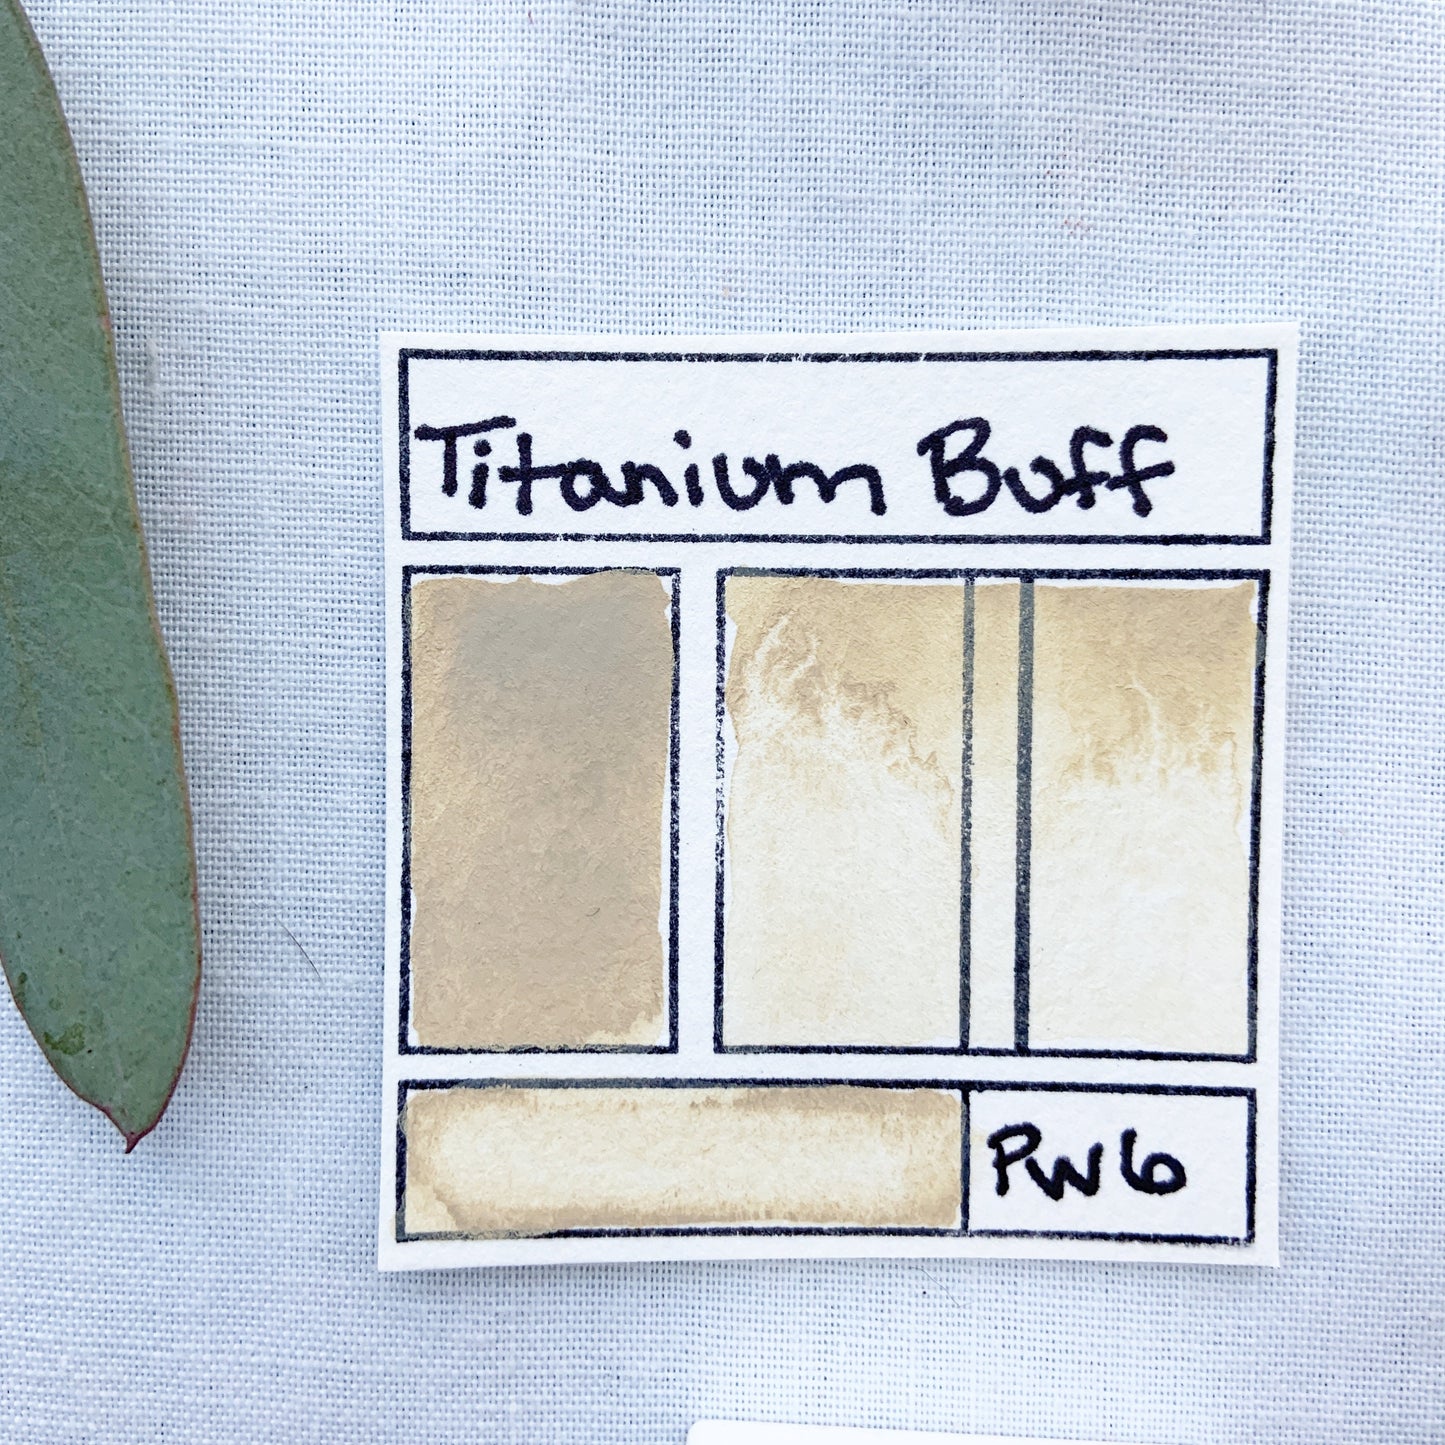 Titanium Buff. Half pan, full pan or bottle cap of handmade watercolor paint